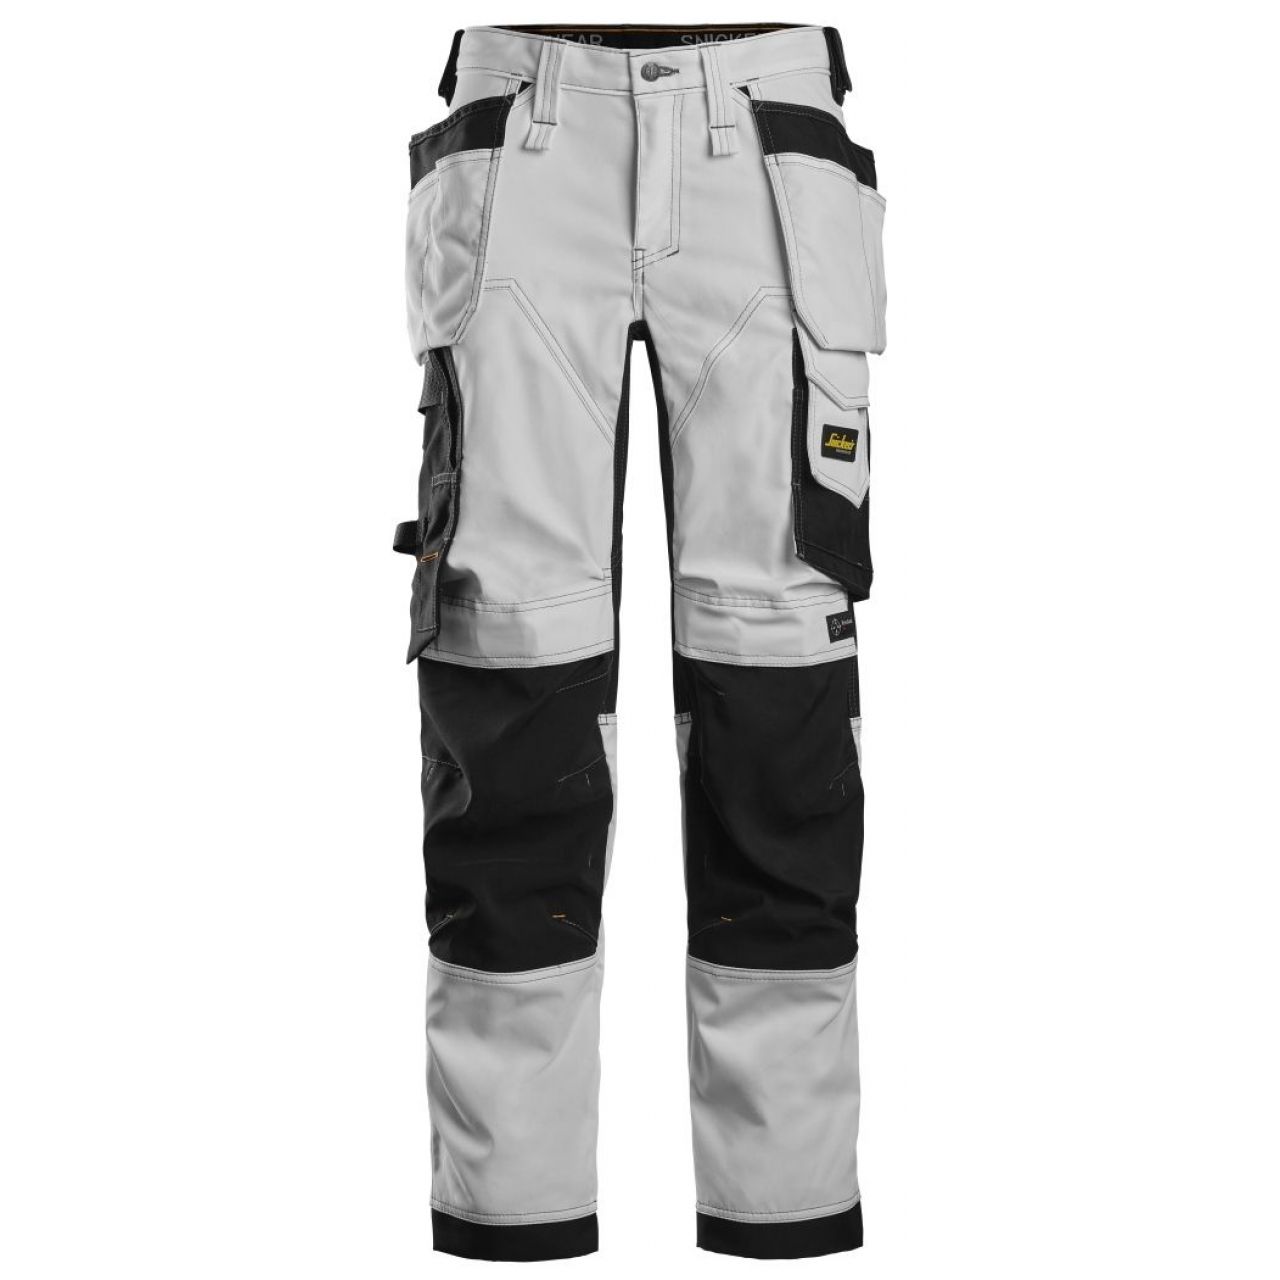 Pantalon elastico mujer bolsillos flotantes AllroundWork blanco-negro talla 040